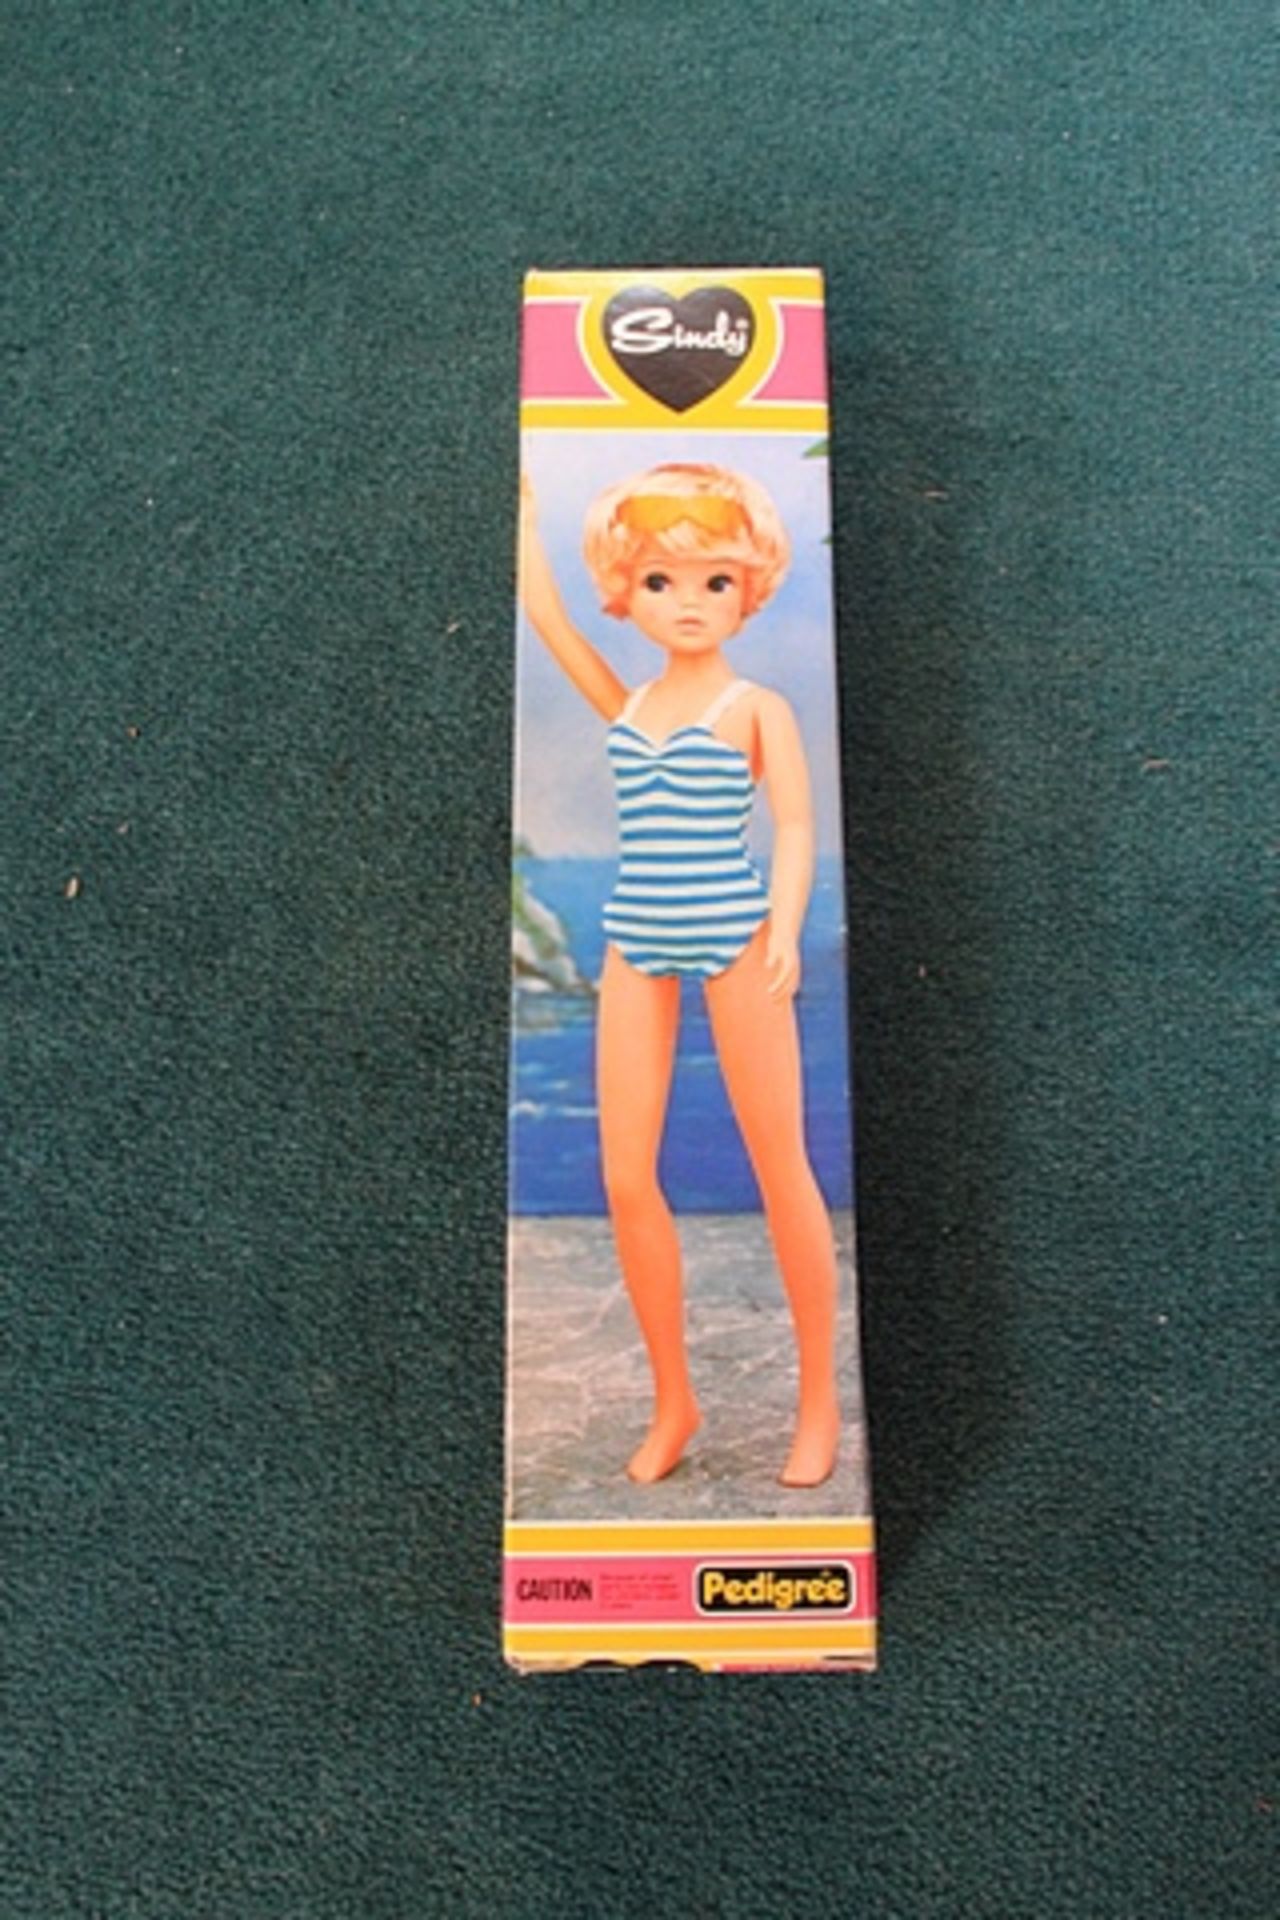 Pedigree (UK) #44713 Sunshine Sindy Doll Complete With Box